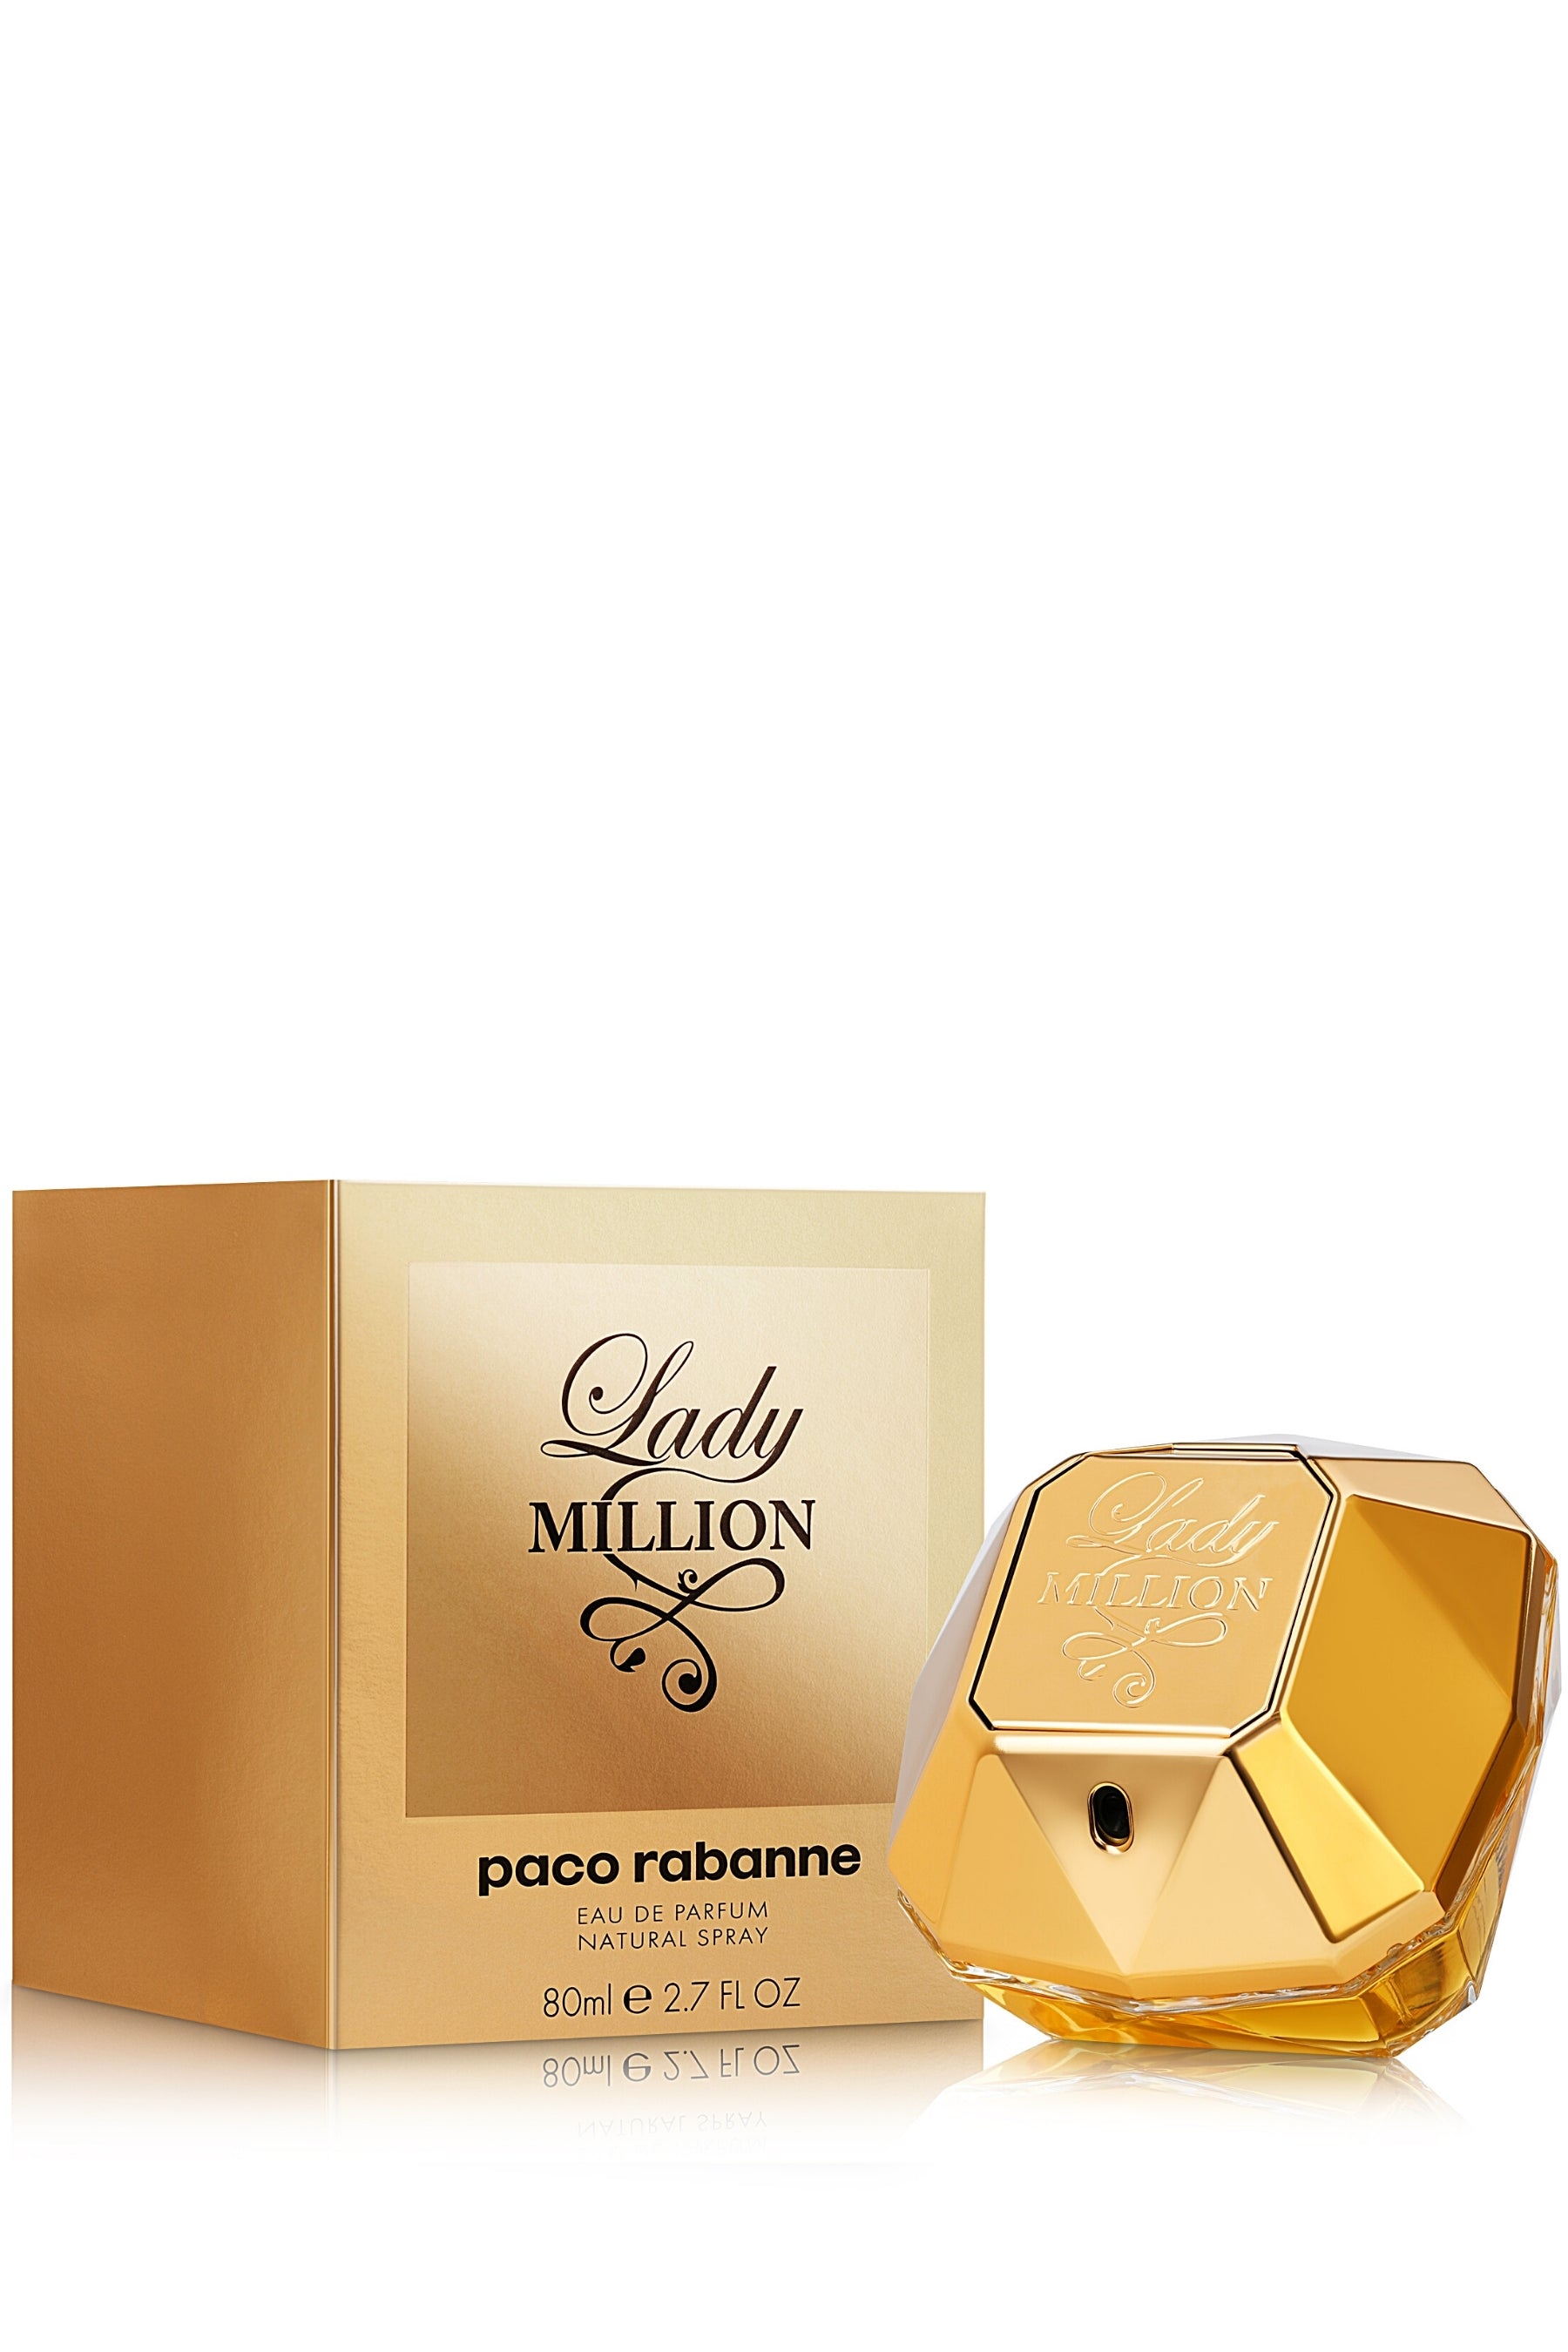 Verpletteren boiler Tot stand brengen Lady Million Perfume by Paco Rabanne | REBL Scents